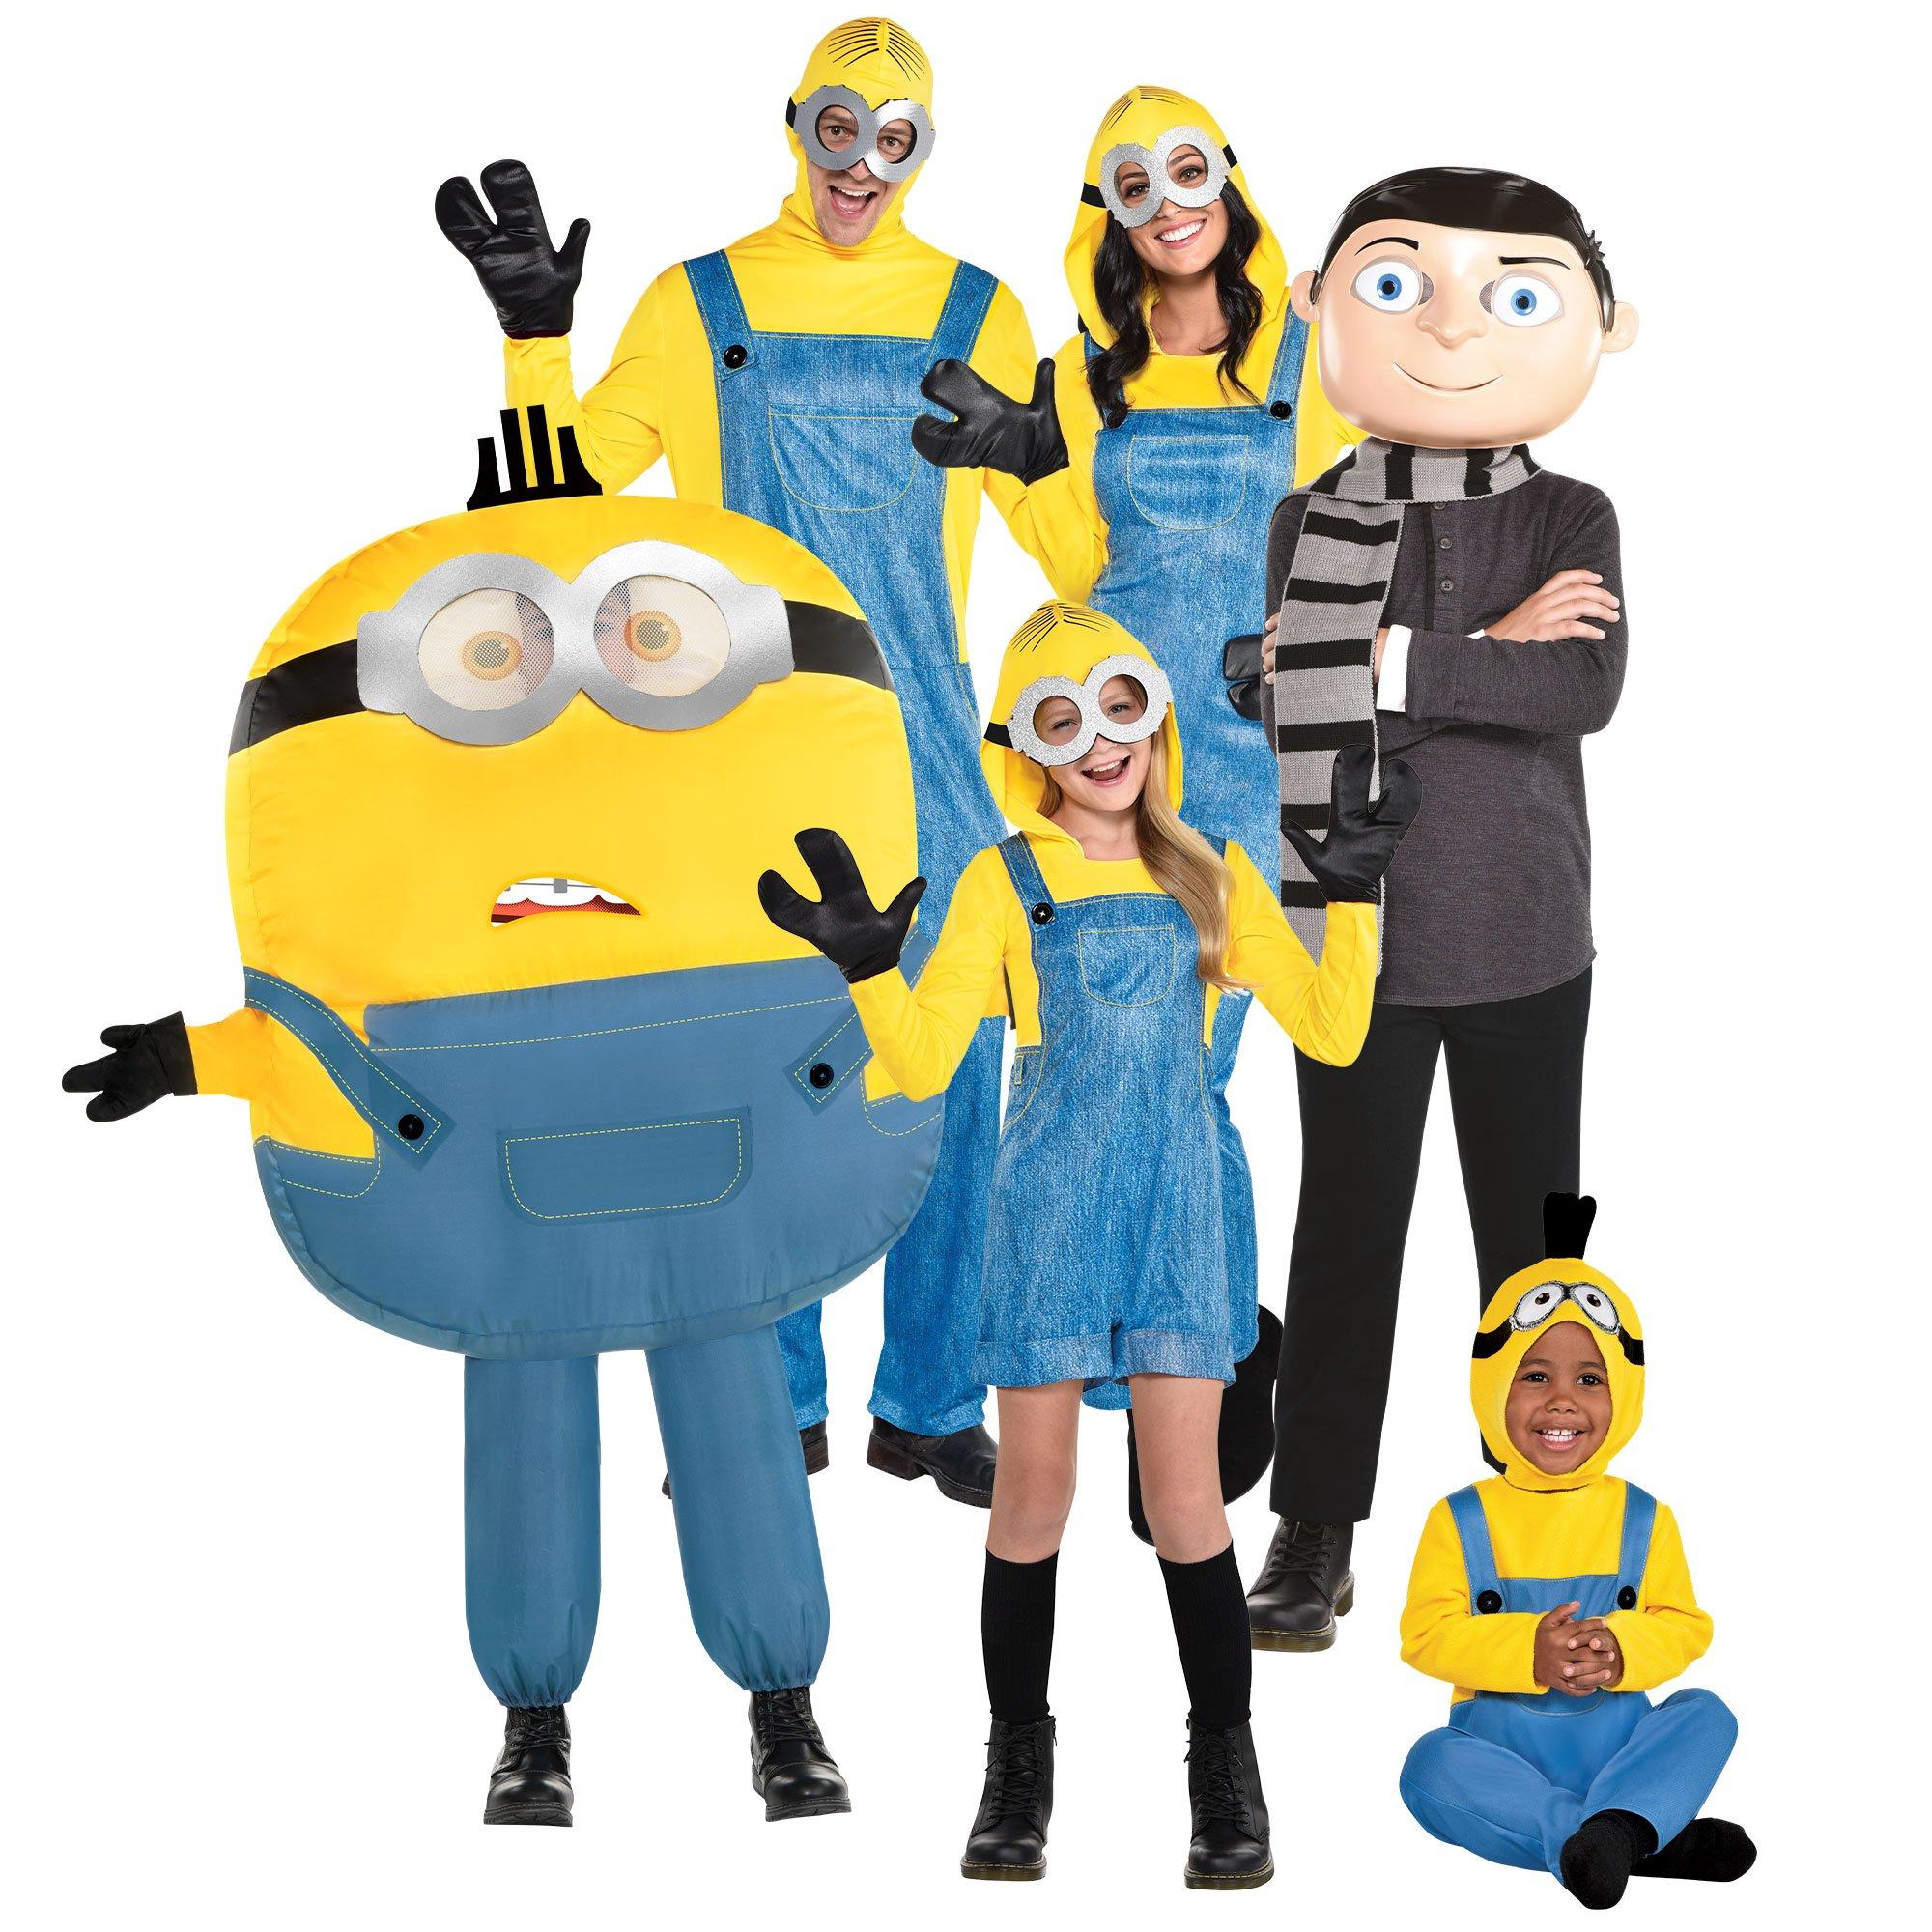 Bob Costume for Kids, Minions